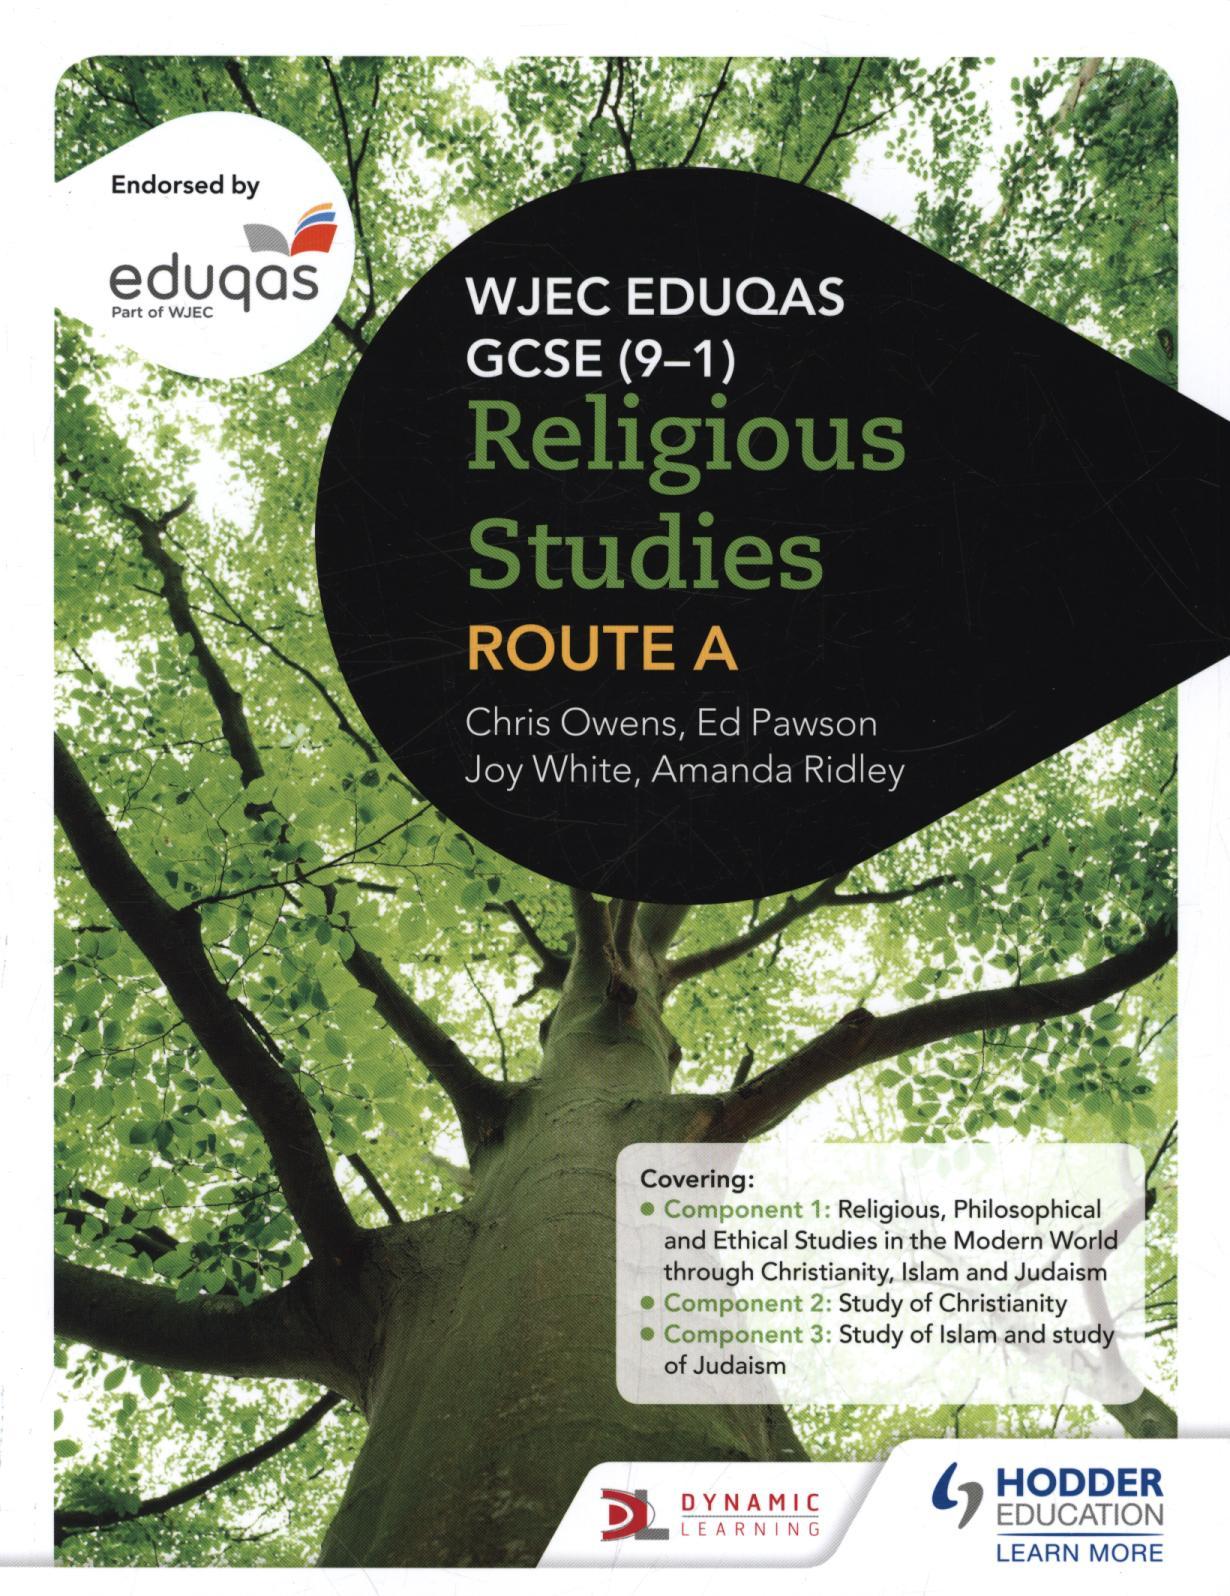 WJEC Eduqas GCSE (9-1) Religious Studies